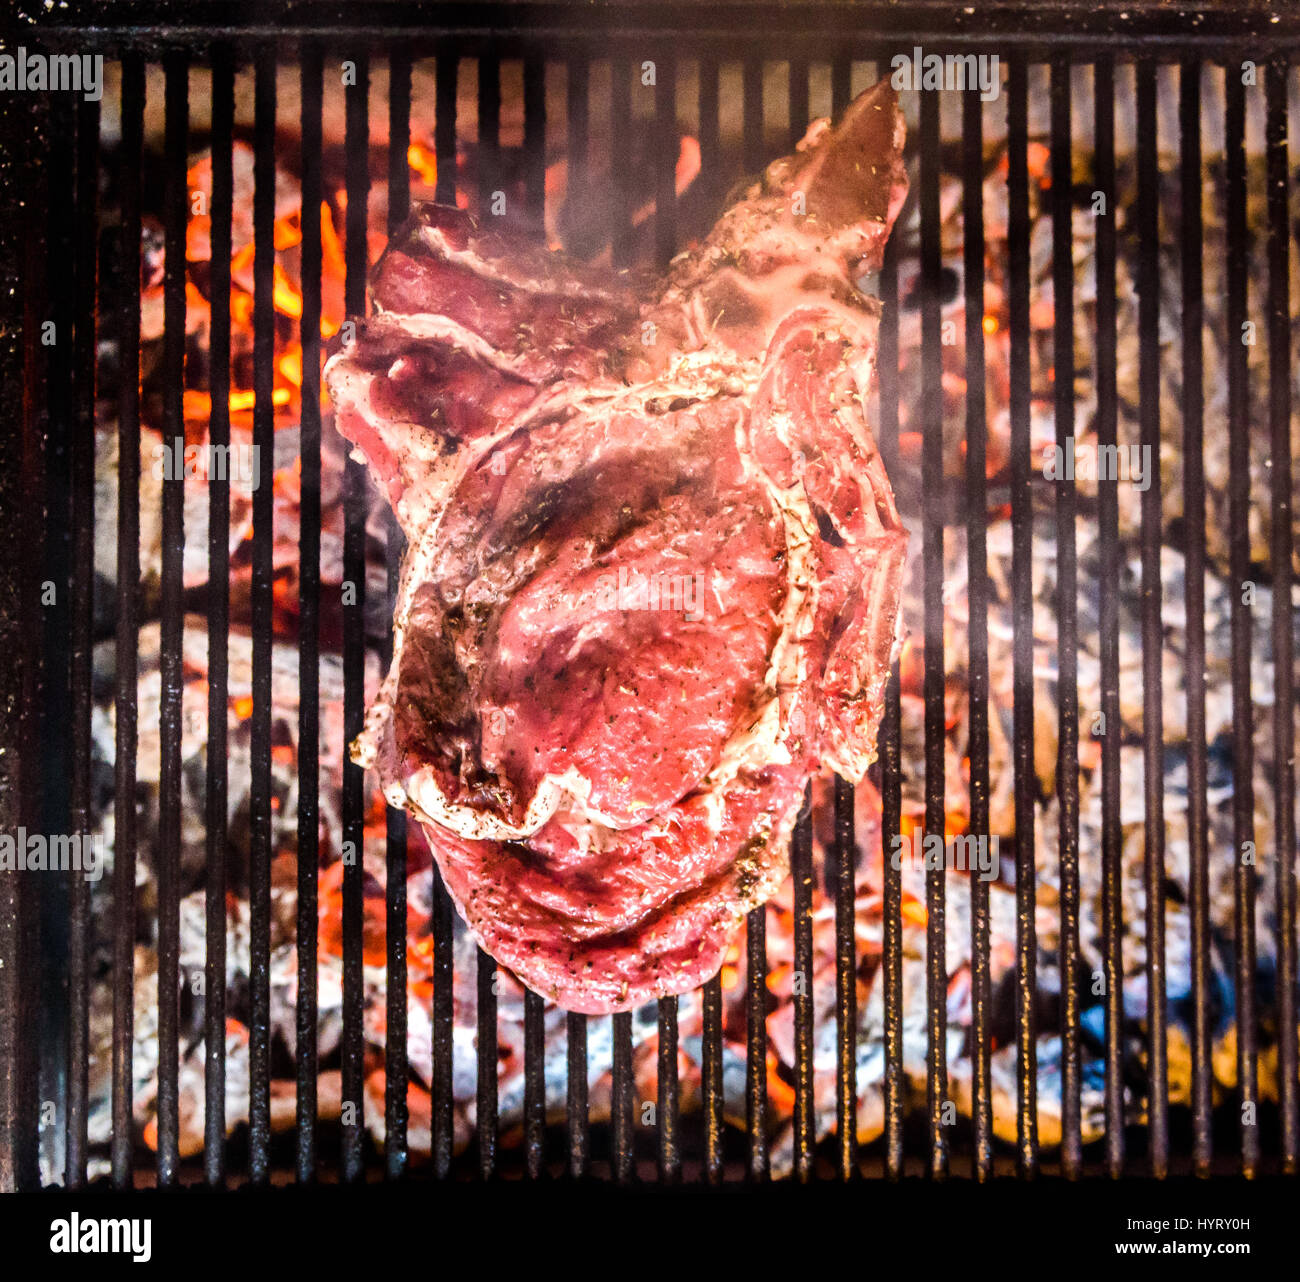 Grilling Big T Bone Steak On Natural Charcoal Barbecue Grill Preparing